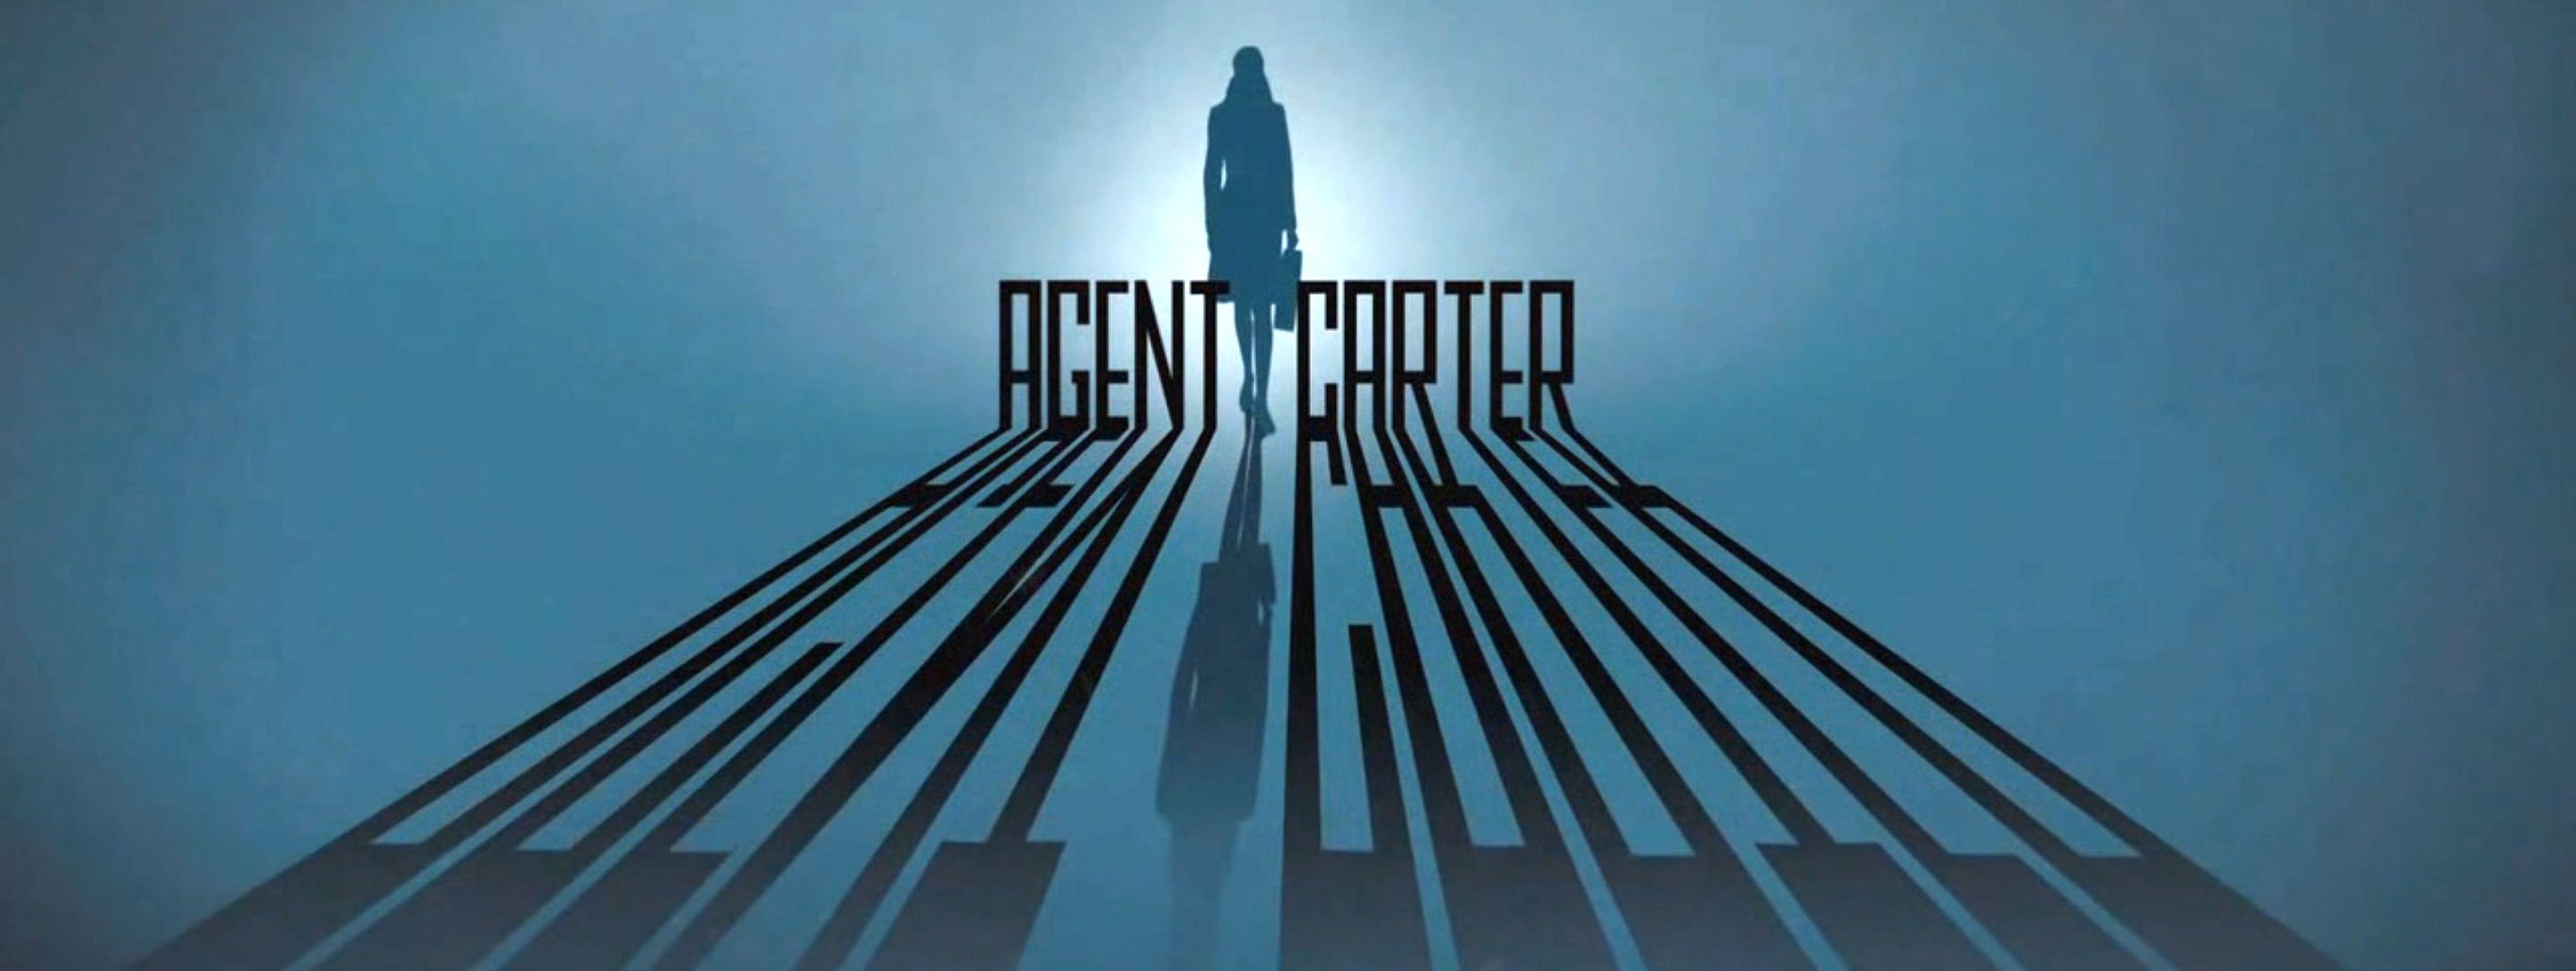 Marvel Agent Carter Superhero Hero Series Action Adventure Drama Sci Fi 1agentcarter Crime Captain America Poster Wallpapers Hd Desktop And Mobile Backgrounds